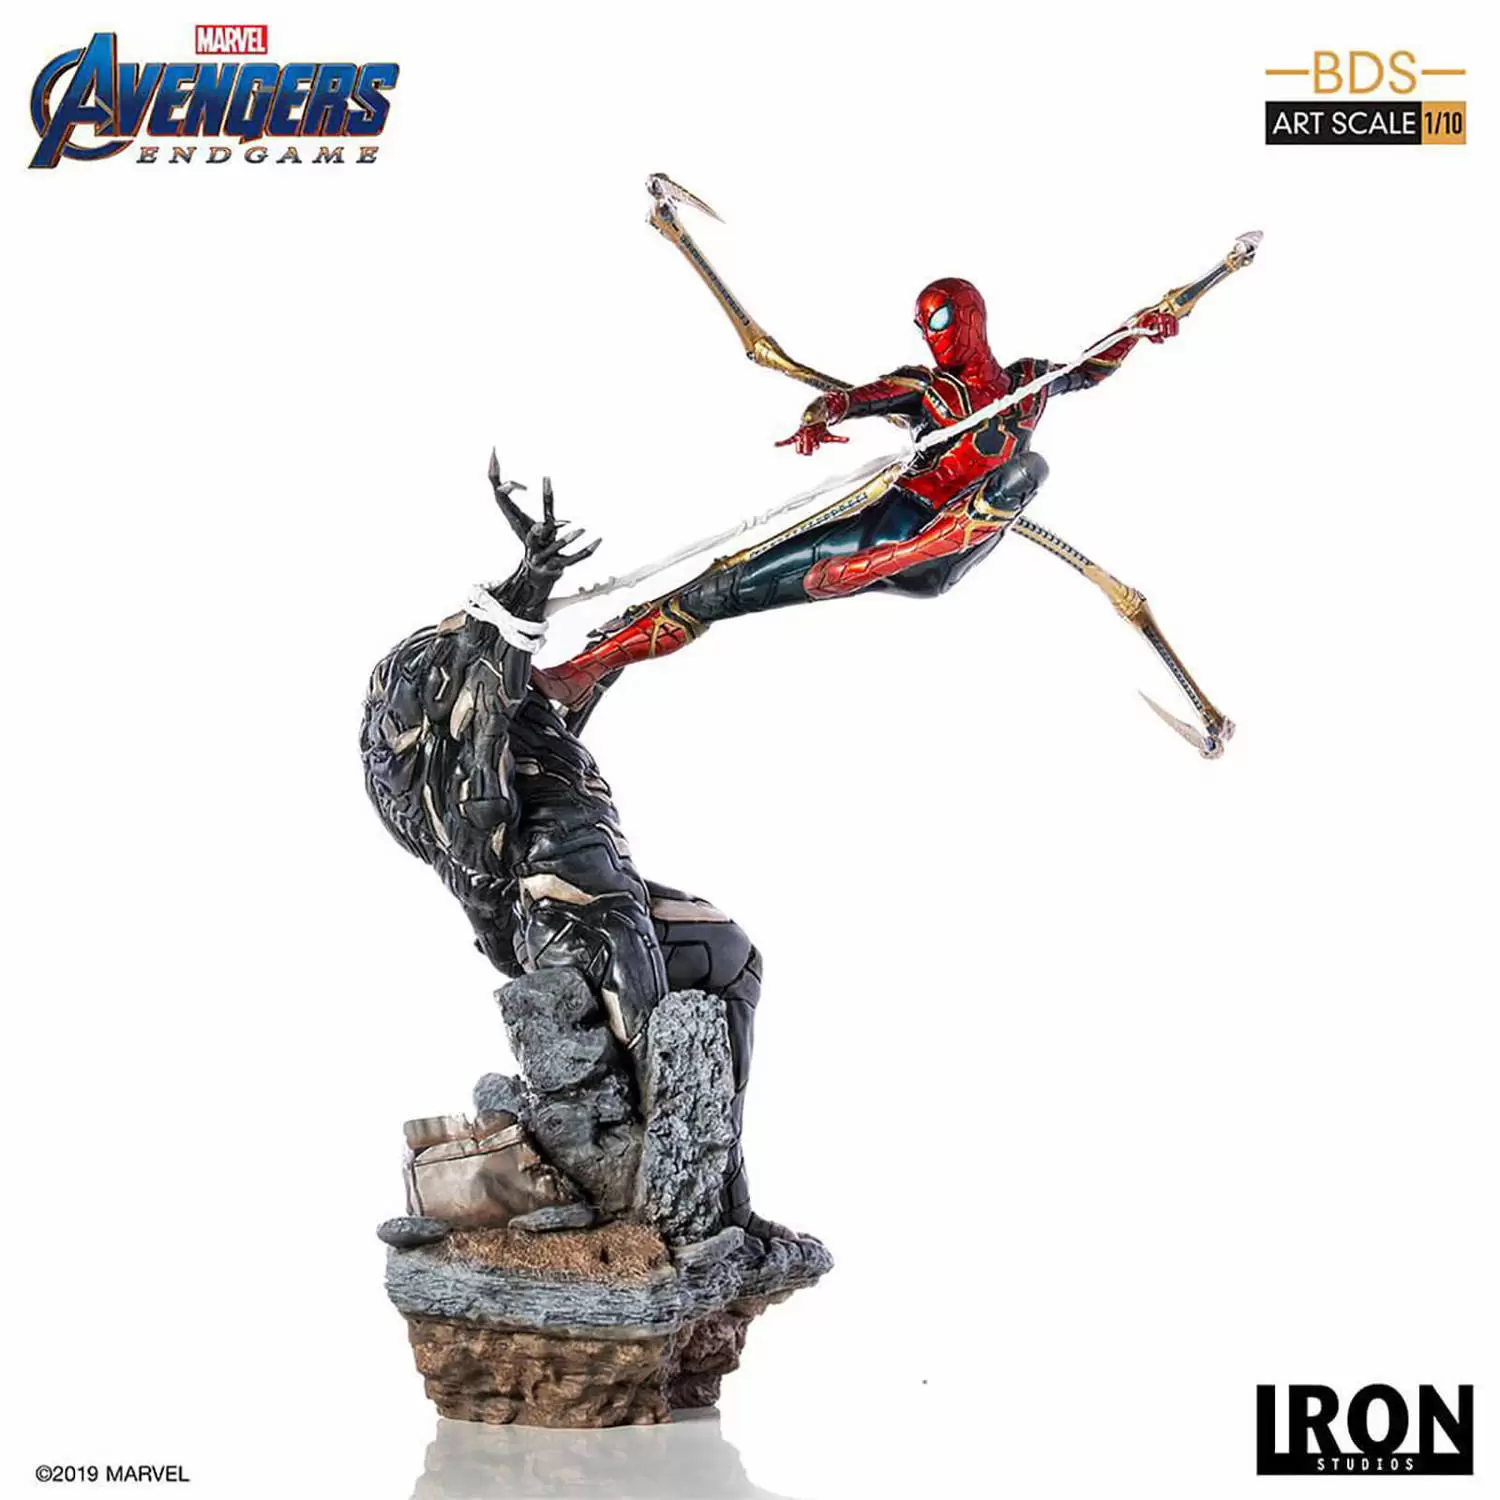 Iron Studios - Avengers: Endgame - Iron Spider vs Outrider - BDS Art Scale 